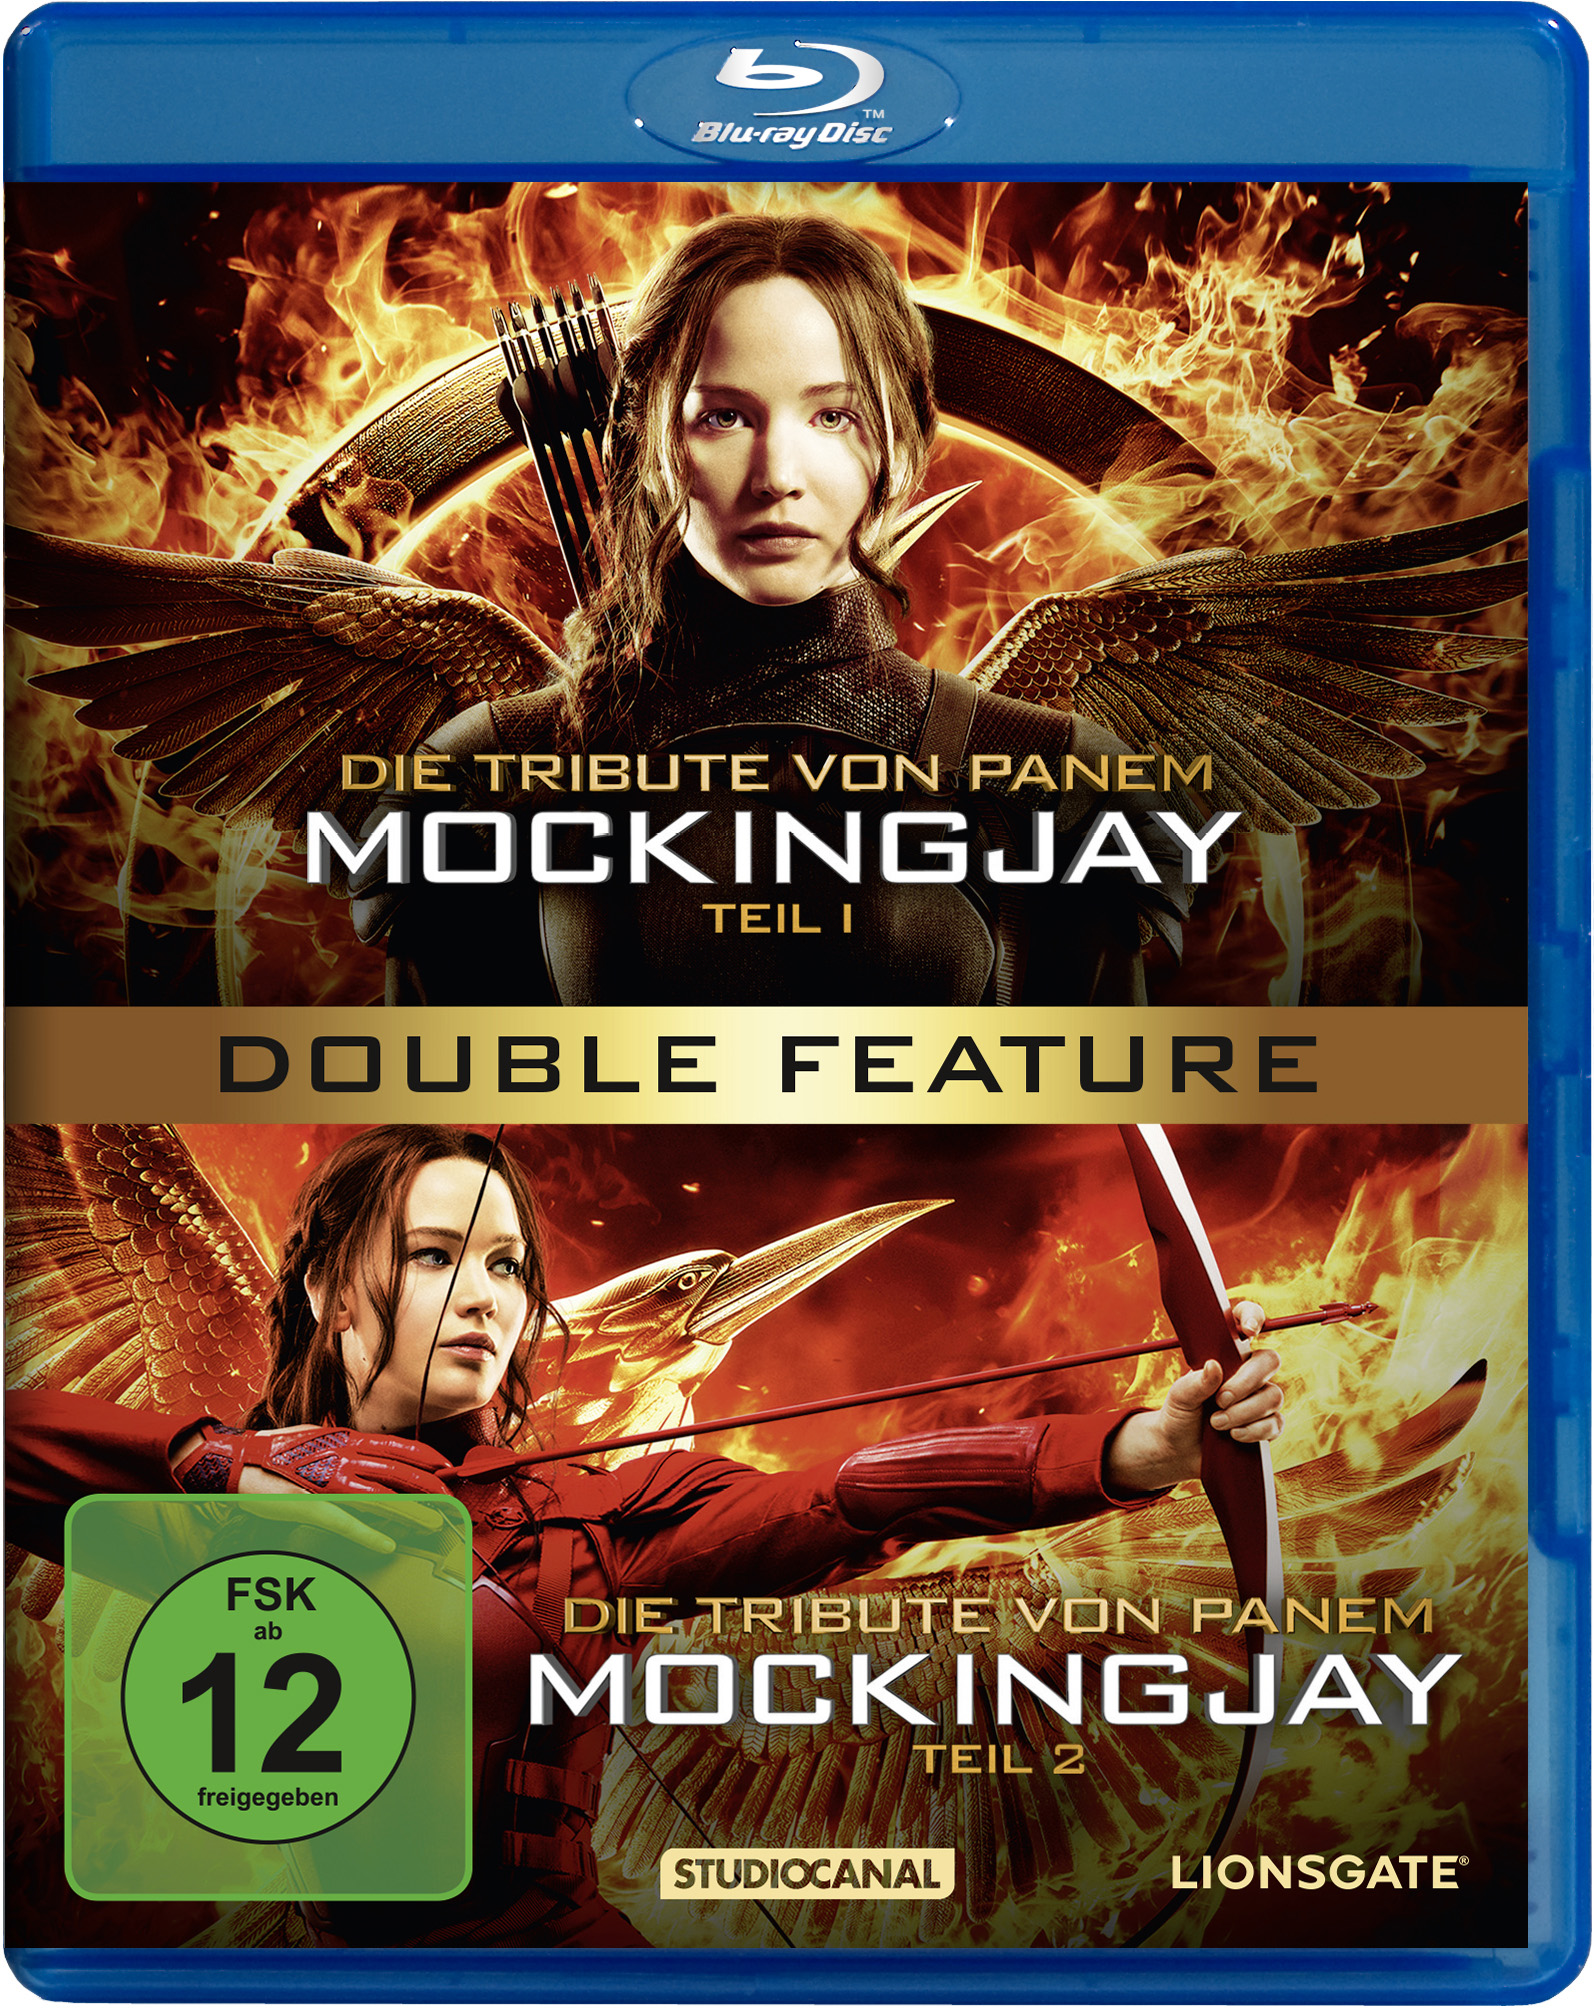 Mockingjay Blu-ray 1+2 - Die von - Tribute Panem Teil